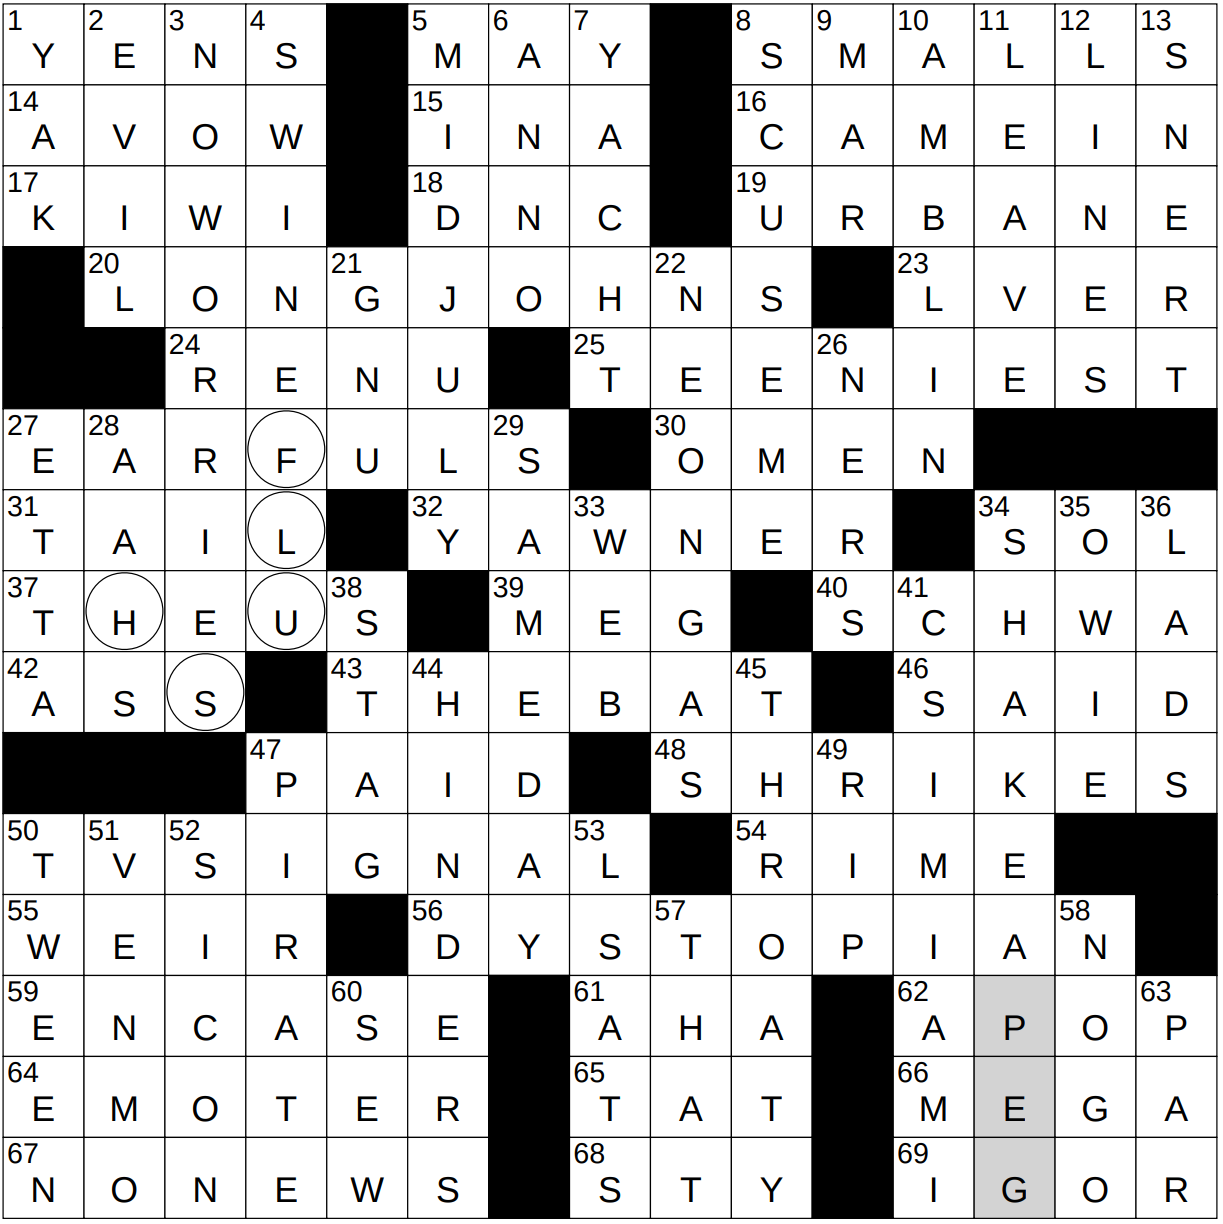 1208 22 NY Times Crossword 8 Dec 22 Thursday NYXCrossword com